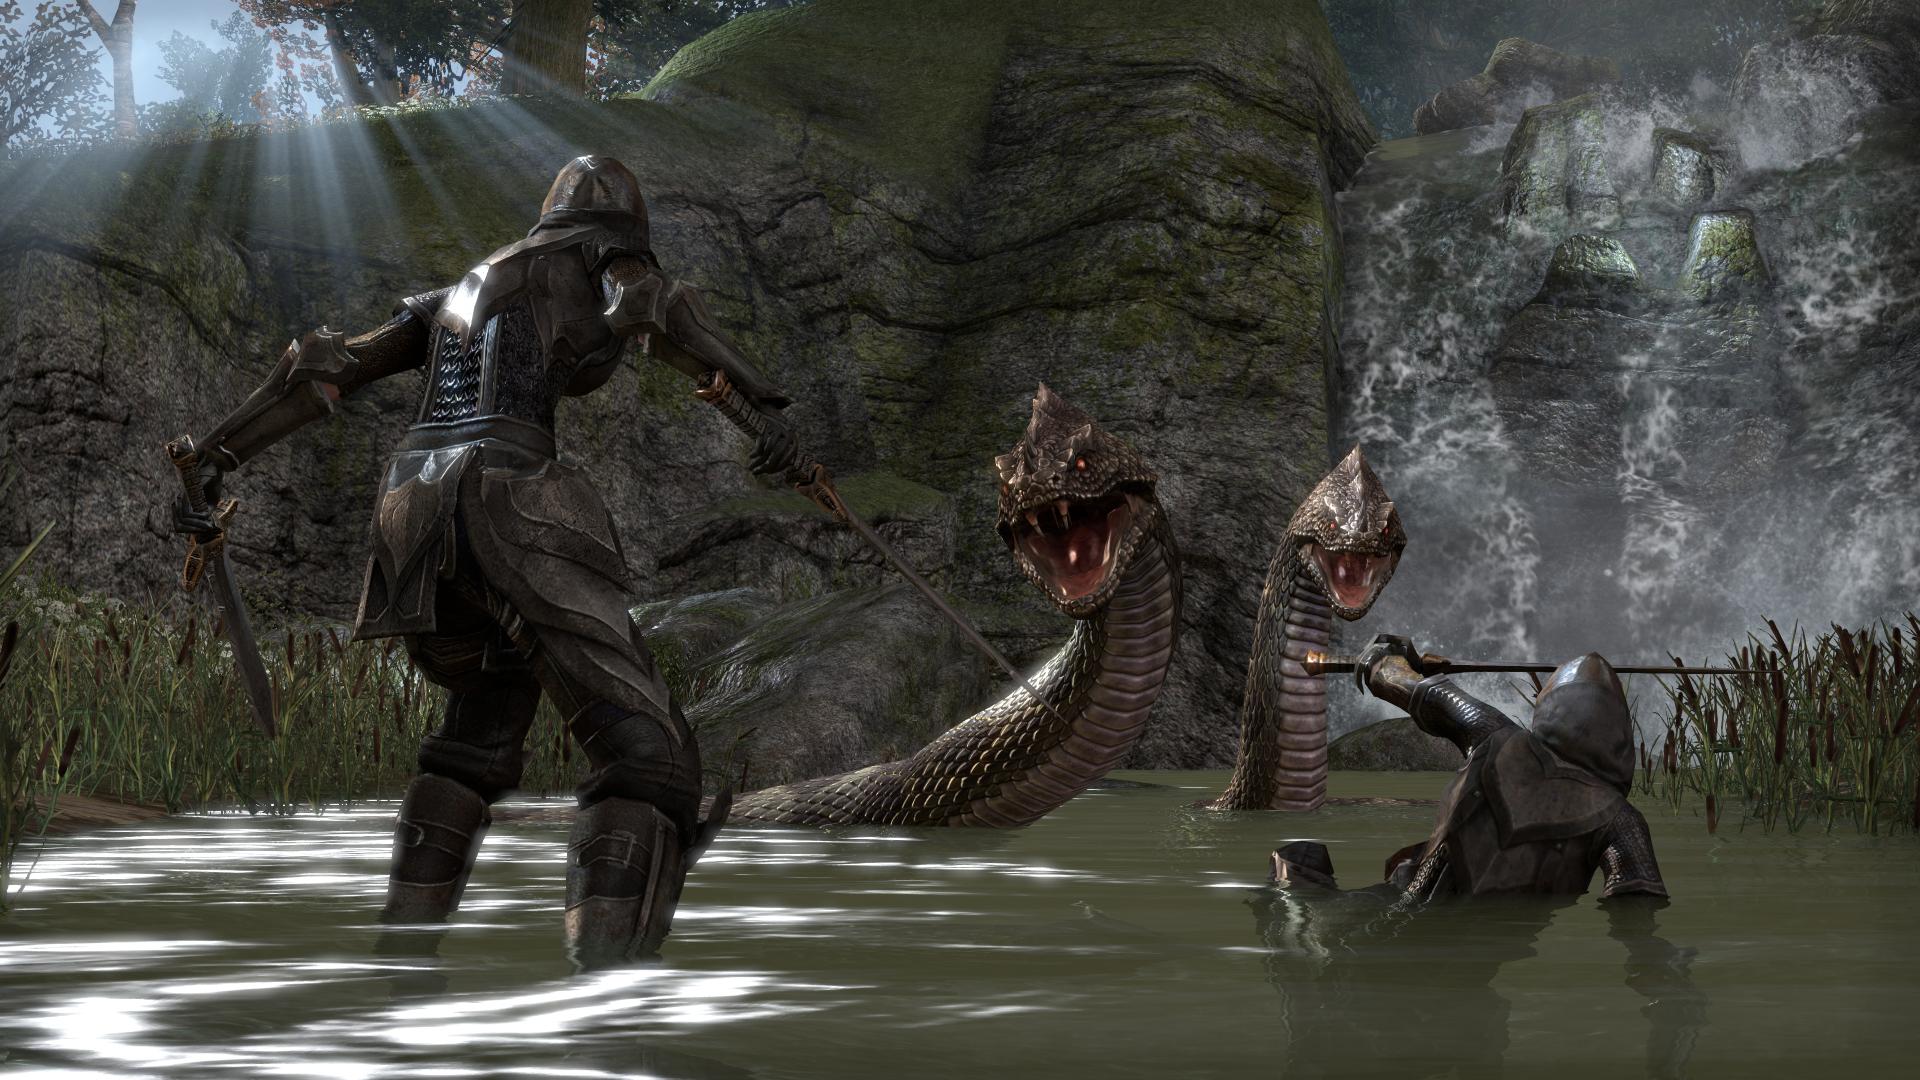 Two warriors fight a giant snake in The Elder Scrolls Online.